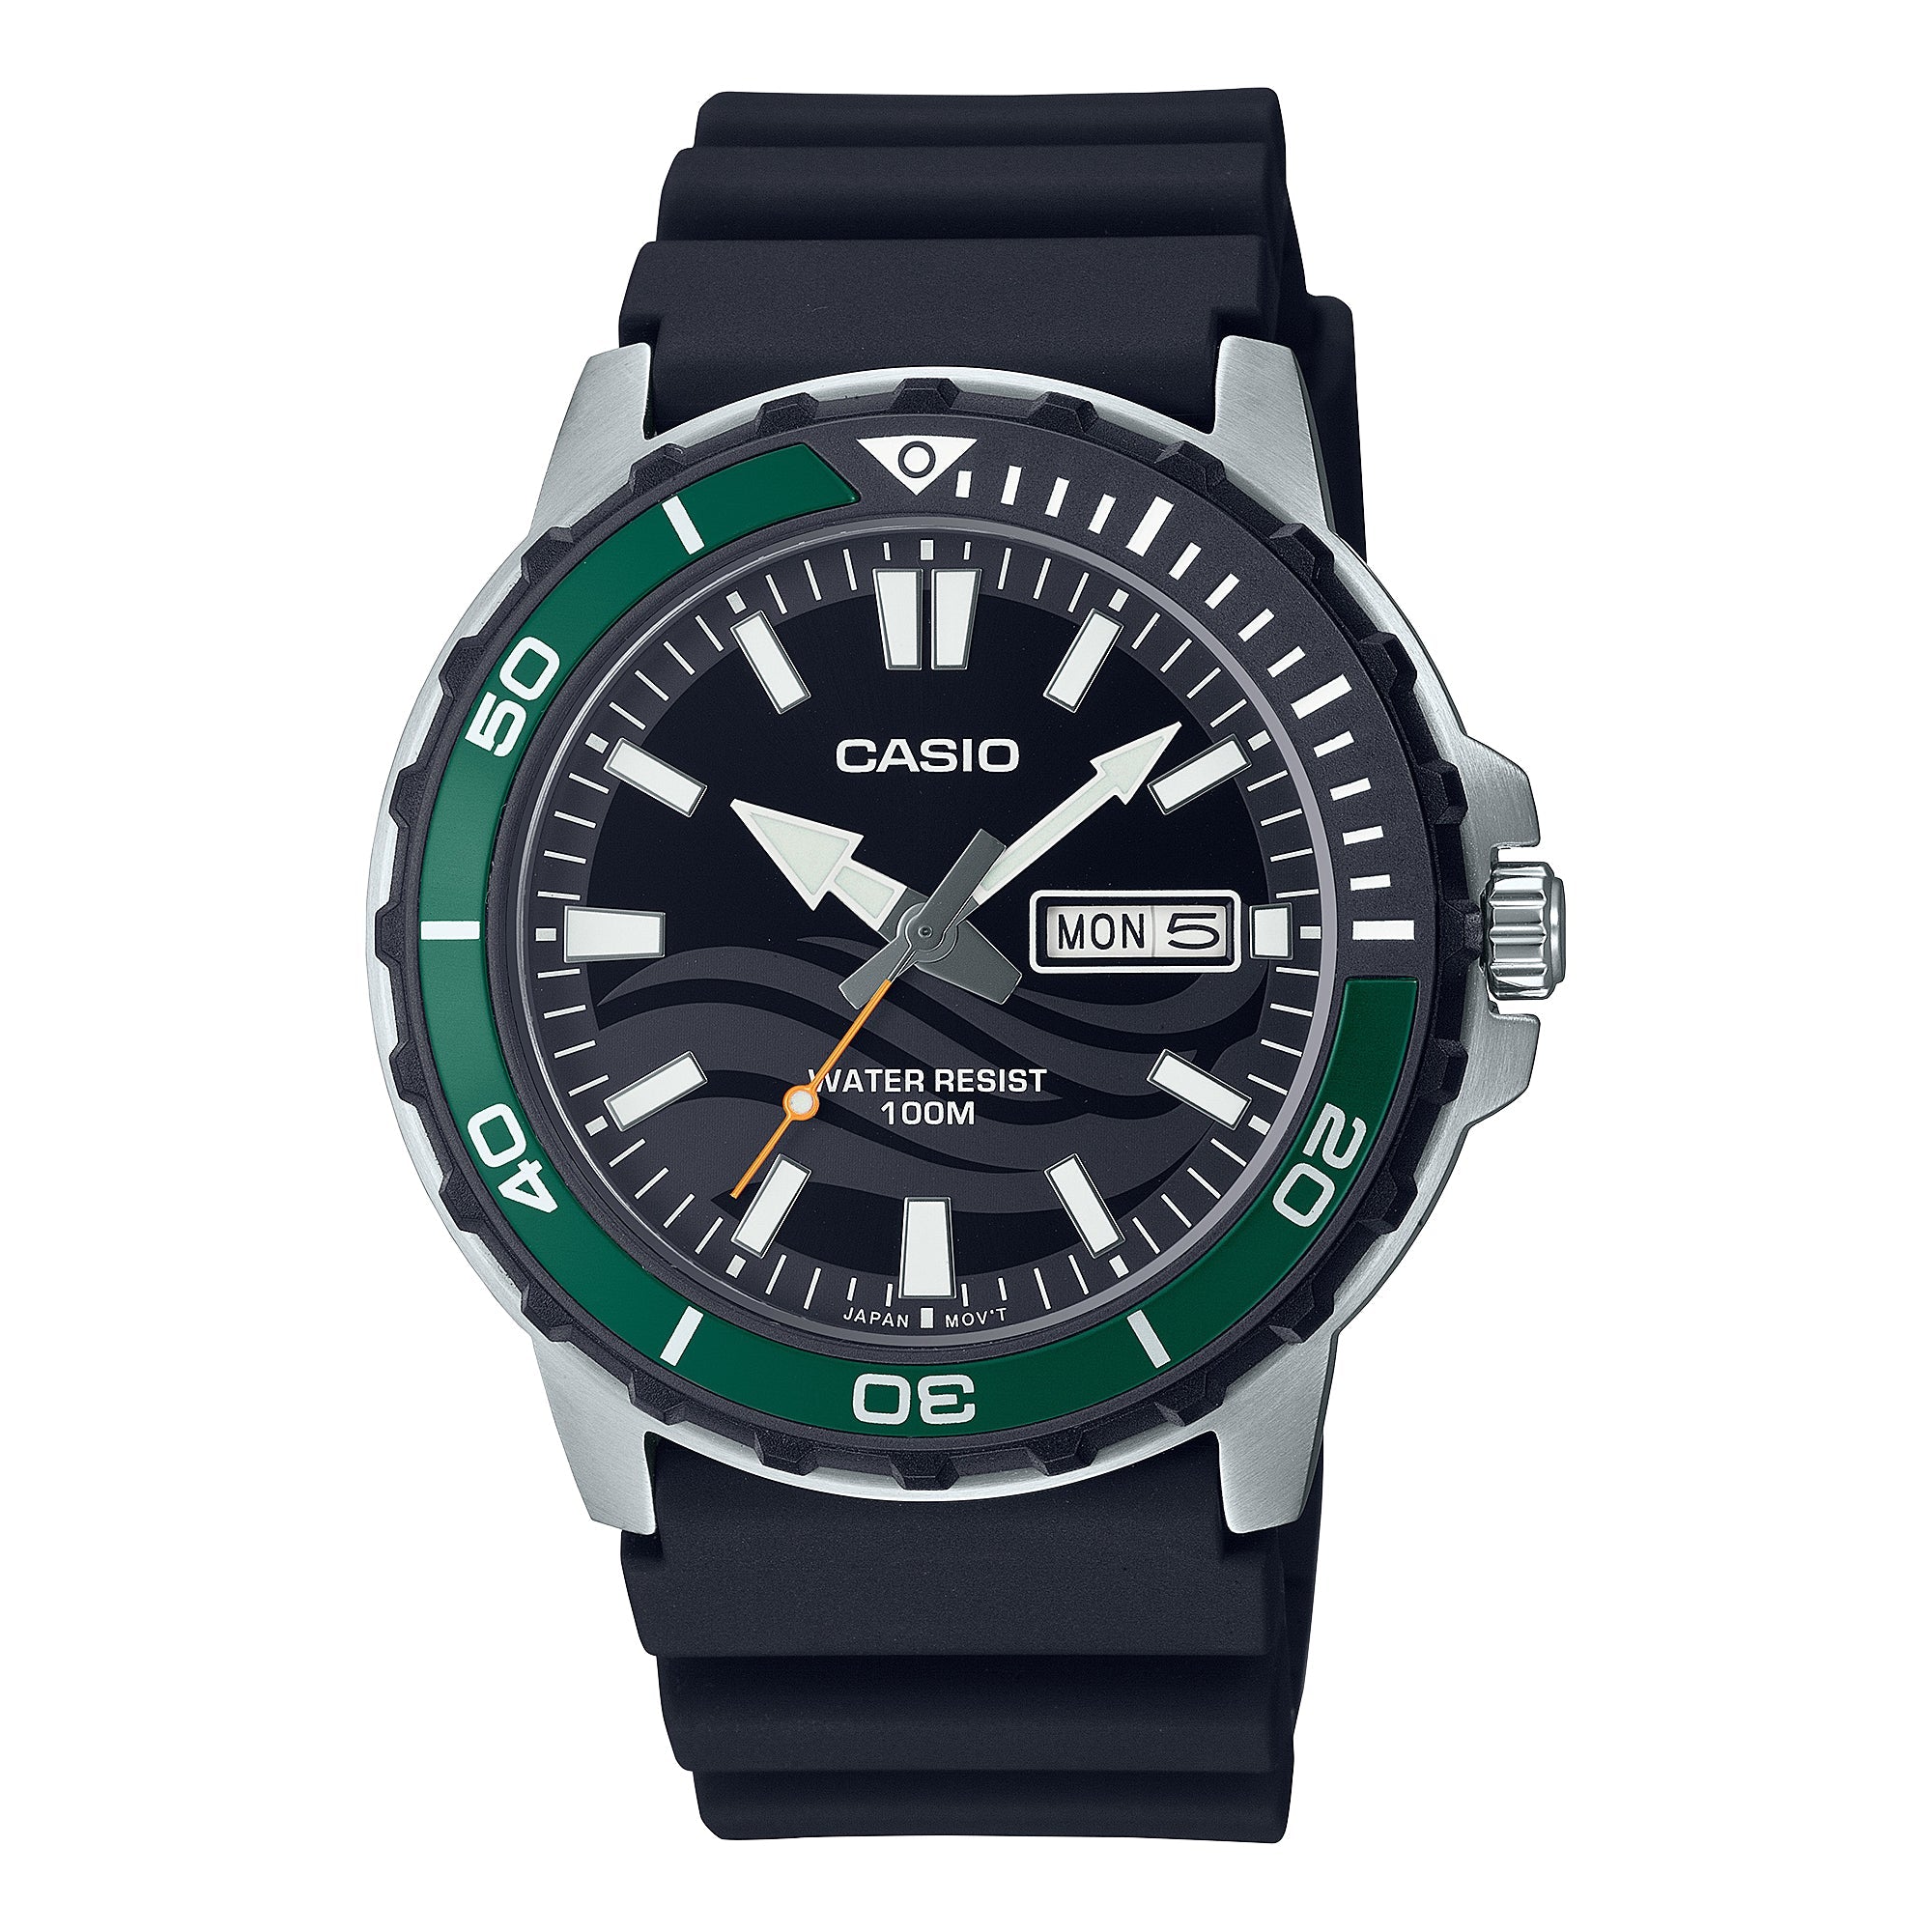 Casio Men's Analog Sporty Black Resin Band Watch MTD125-1A MTD-125-1A Watchspree